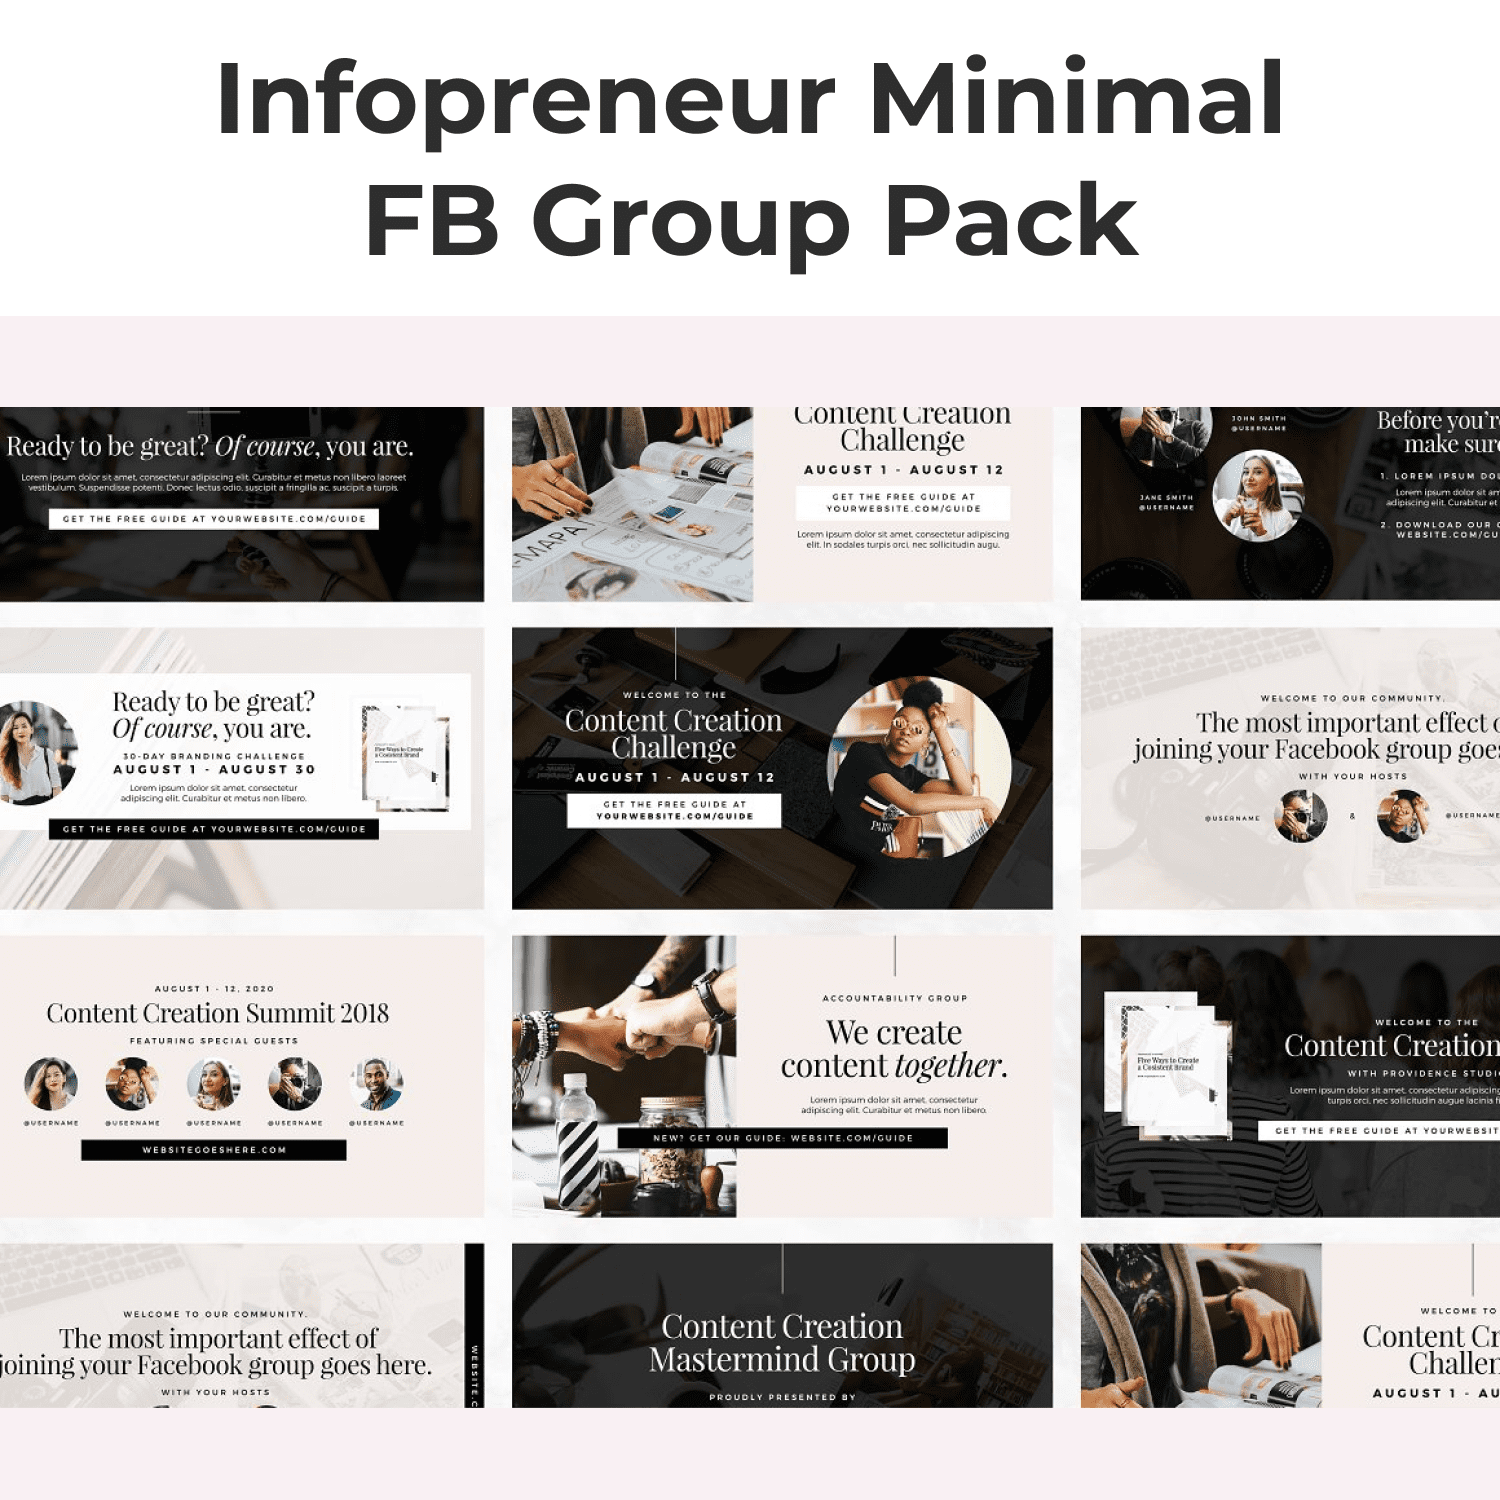 Infopreneur Minimal FB Group Pack cover image.